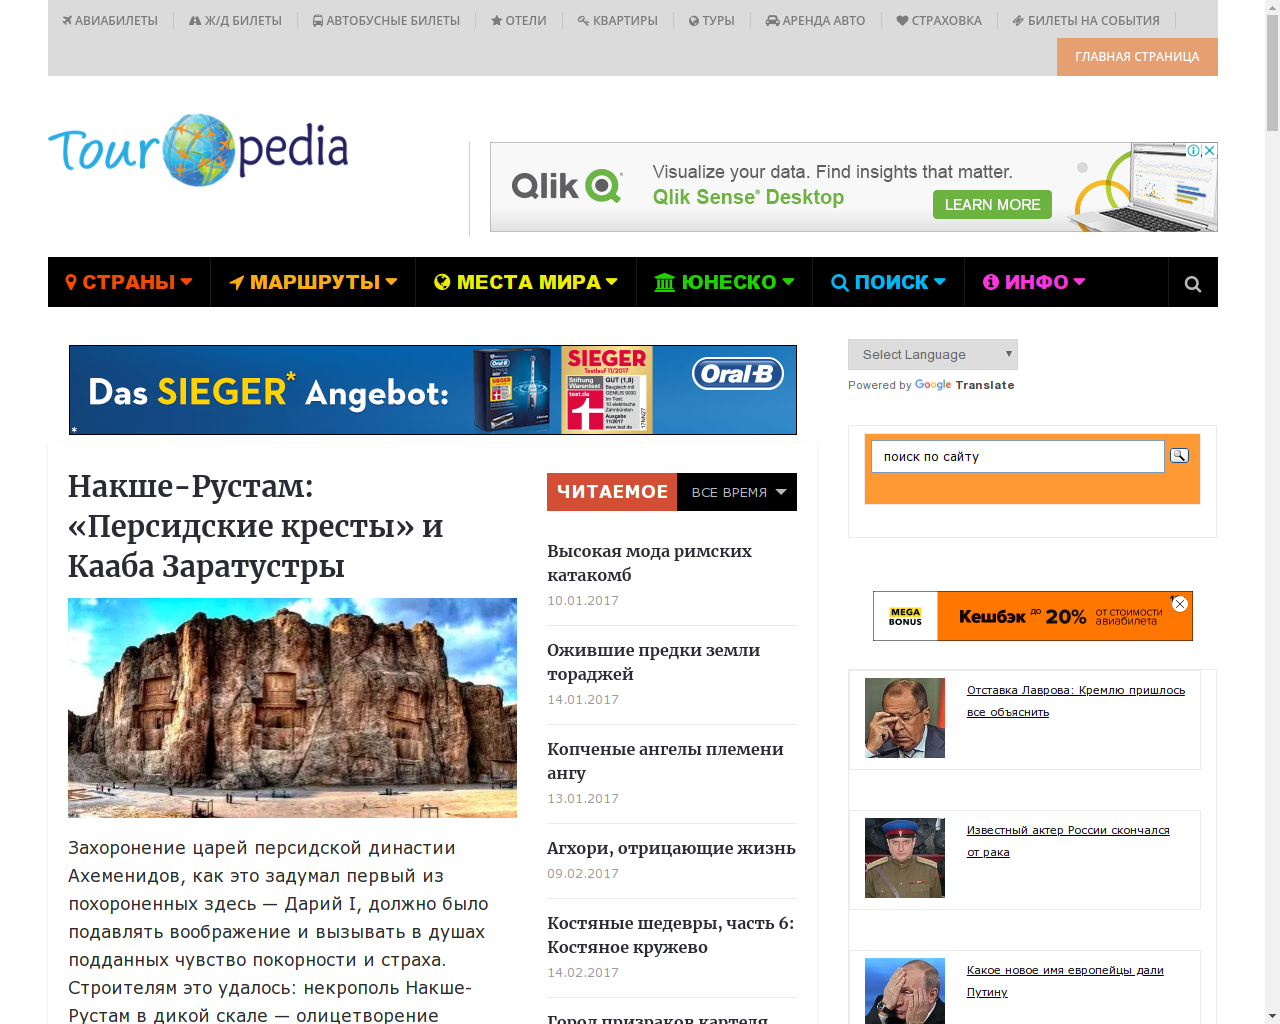 Изображение сайта tourpedia.ru в разрешении 1280x1024